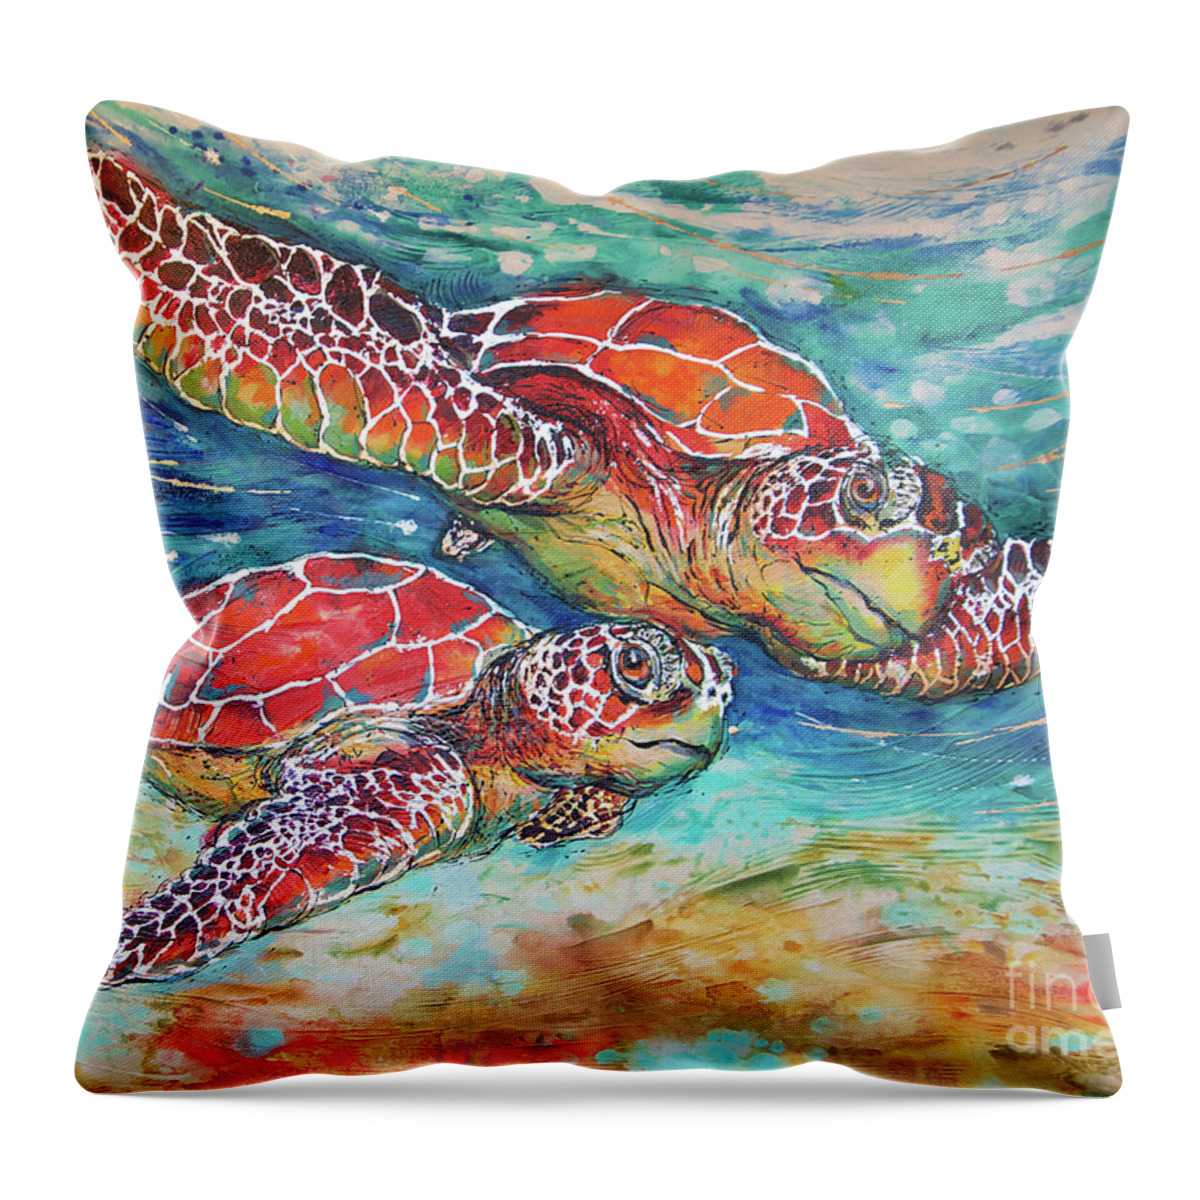  Throw Pillow featuring the painting Splendid Sea Turtles by Jyotika Shroff